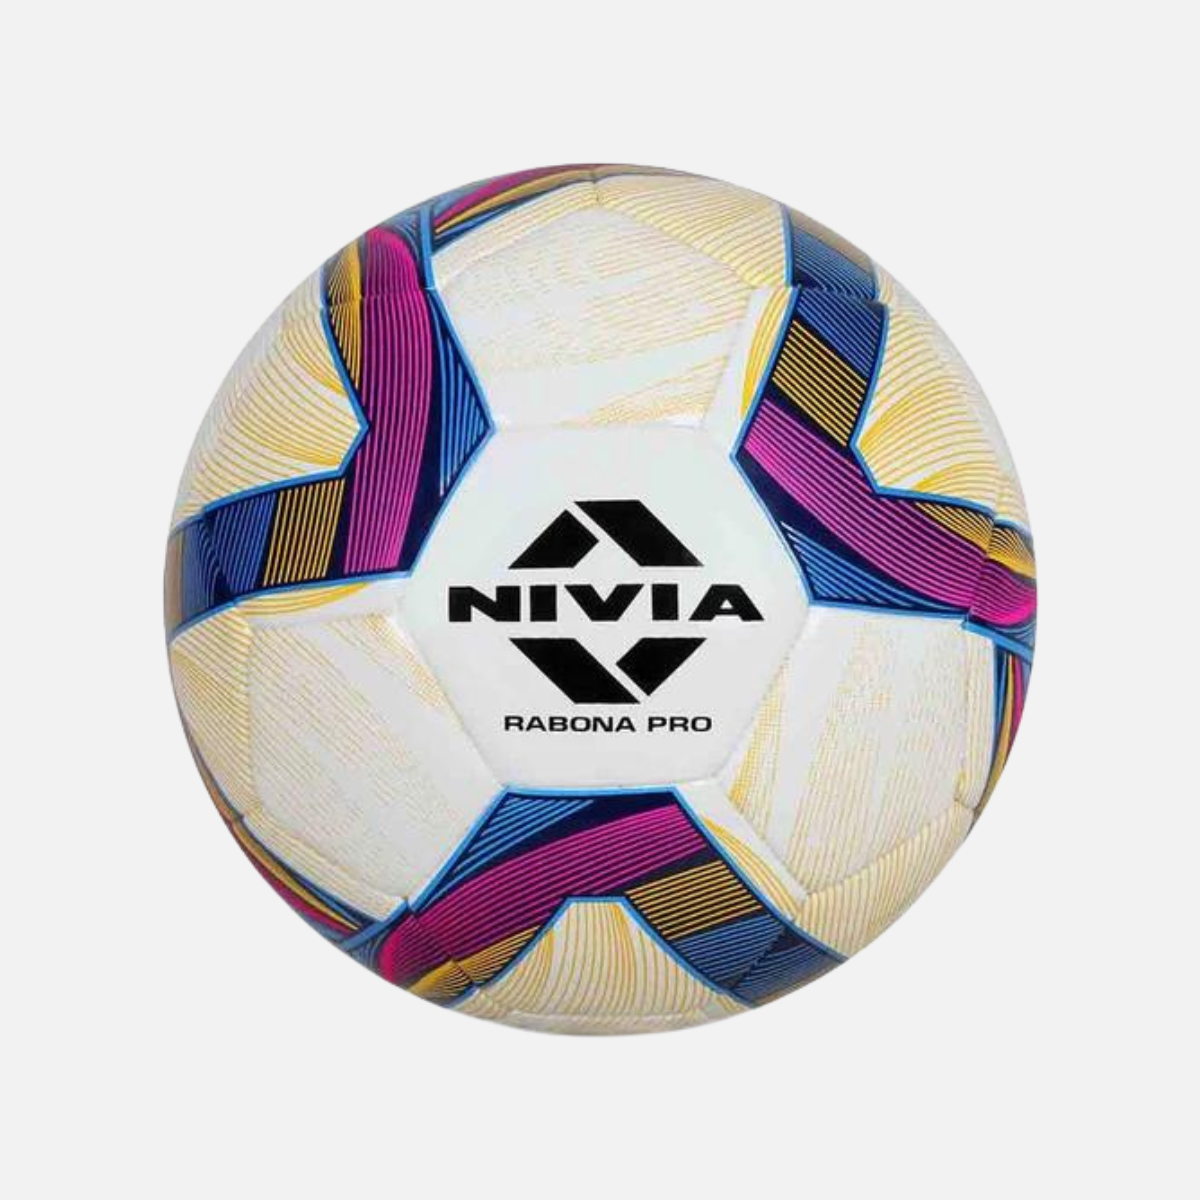 Nivia Rabona Pro Football -White